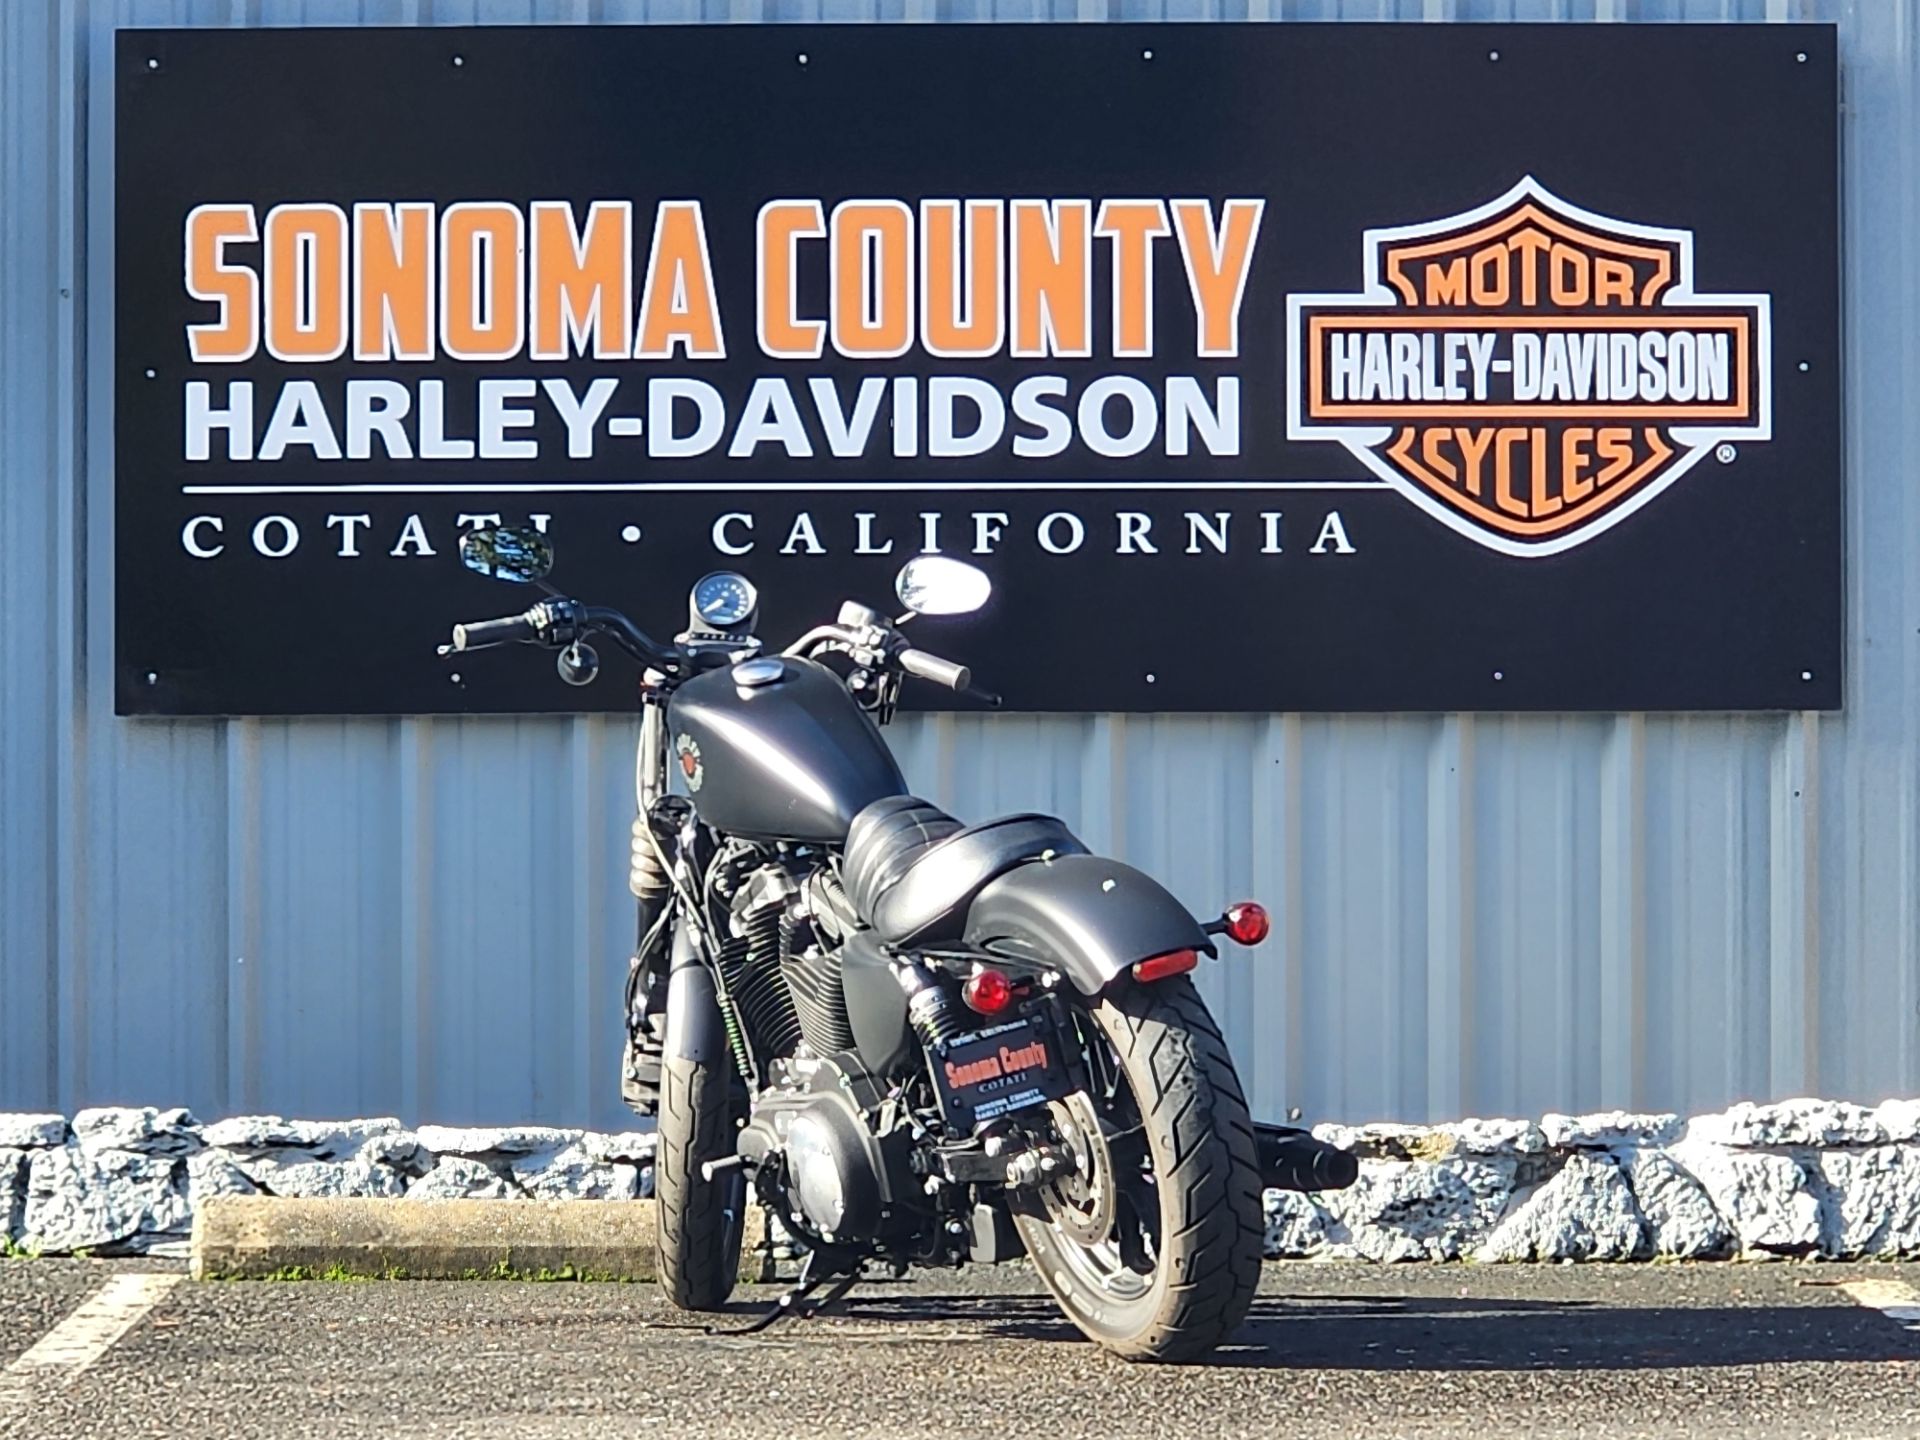 2019 Harley-Davidson SPORTSTER 883 IRON in Cotati, California - Photo 4